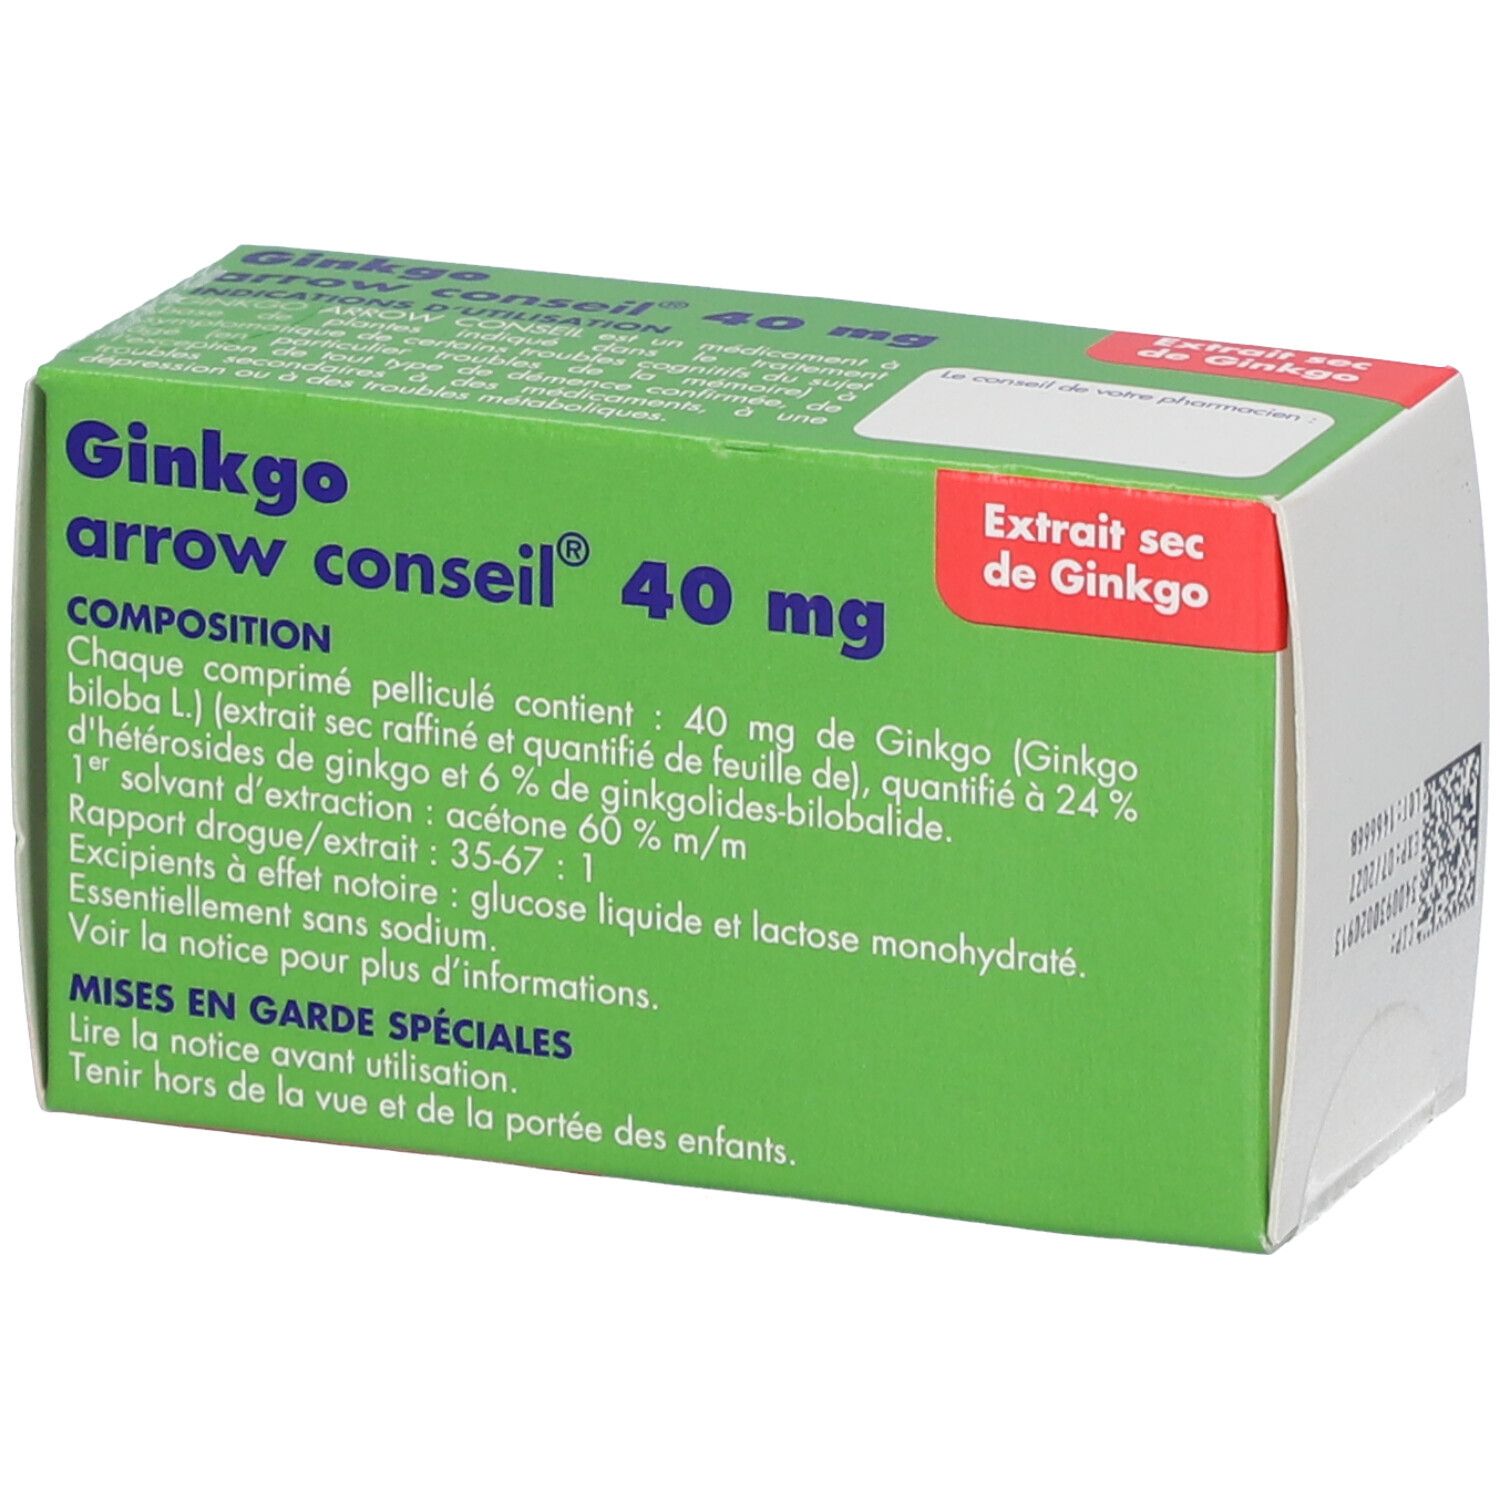 Ginkgo arrow conseil® 40 mg